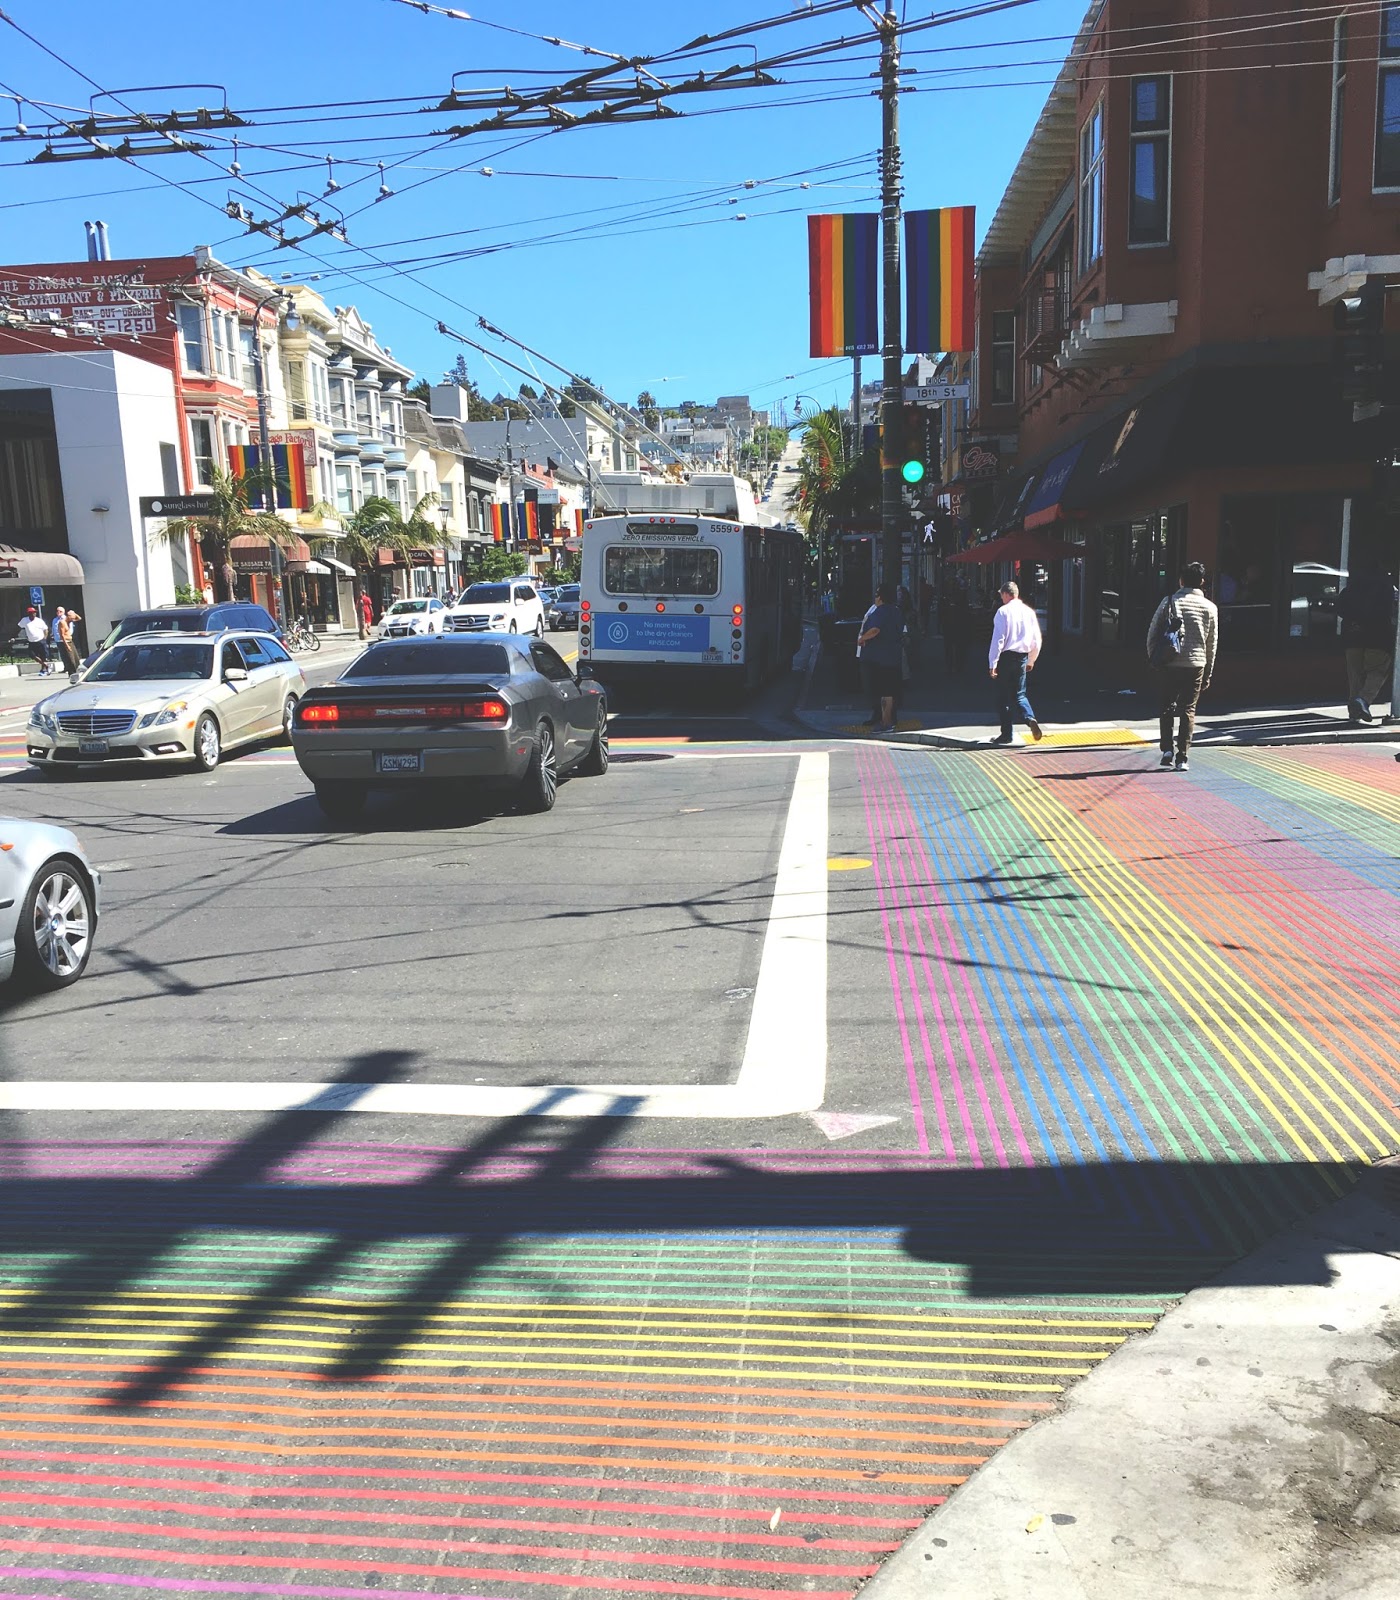 Castro Street in San Francisco, California